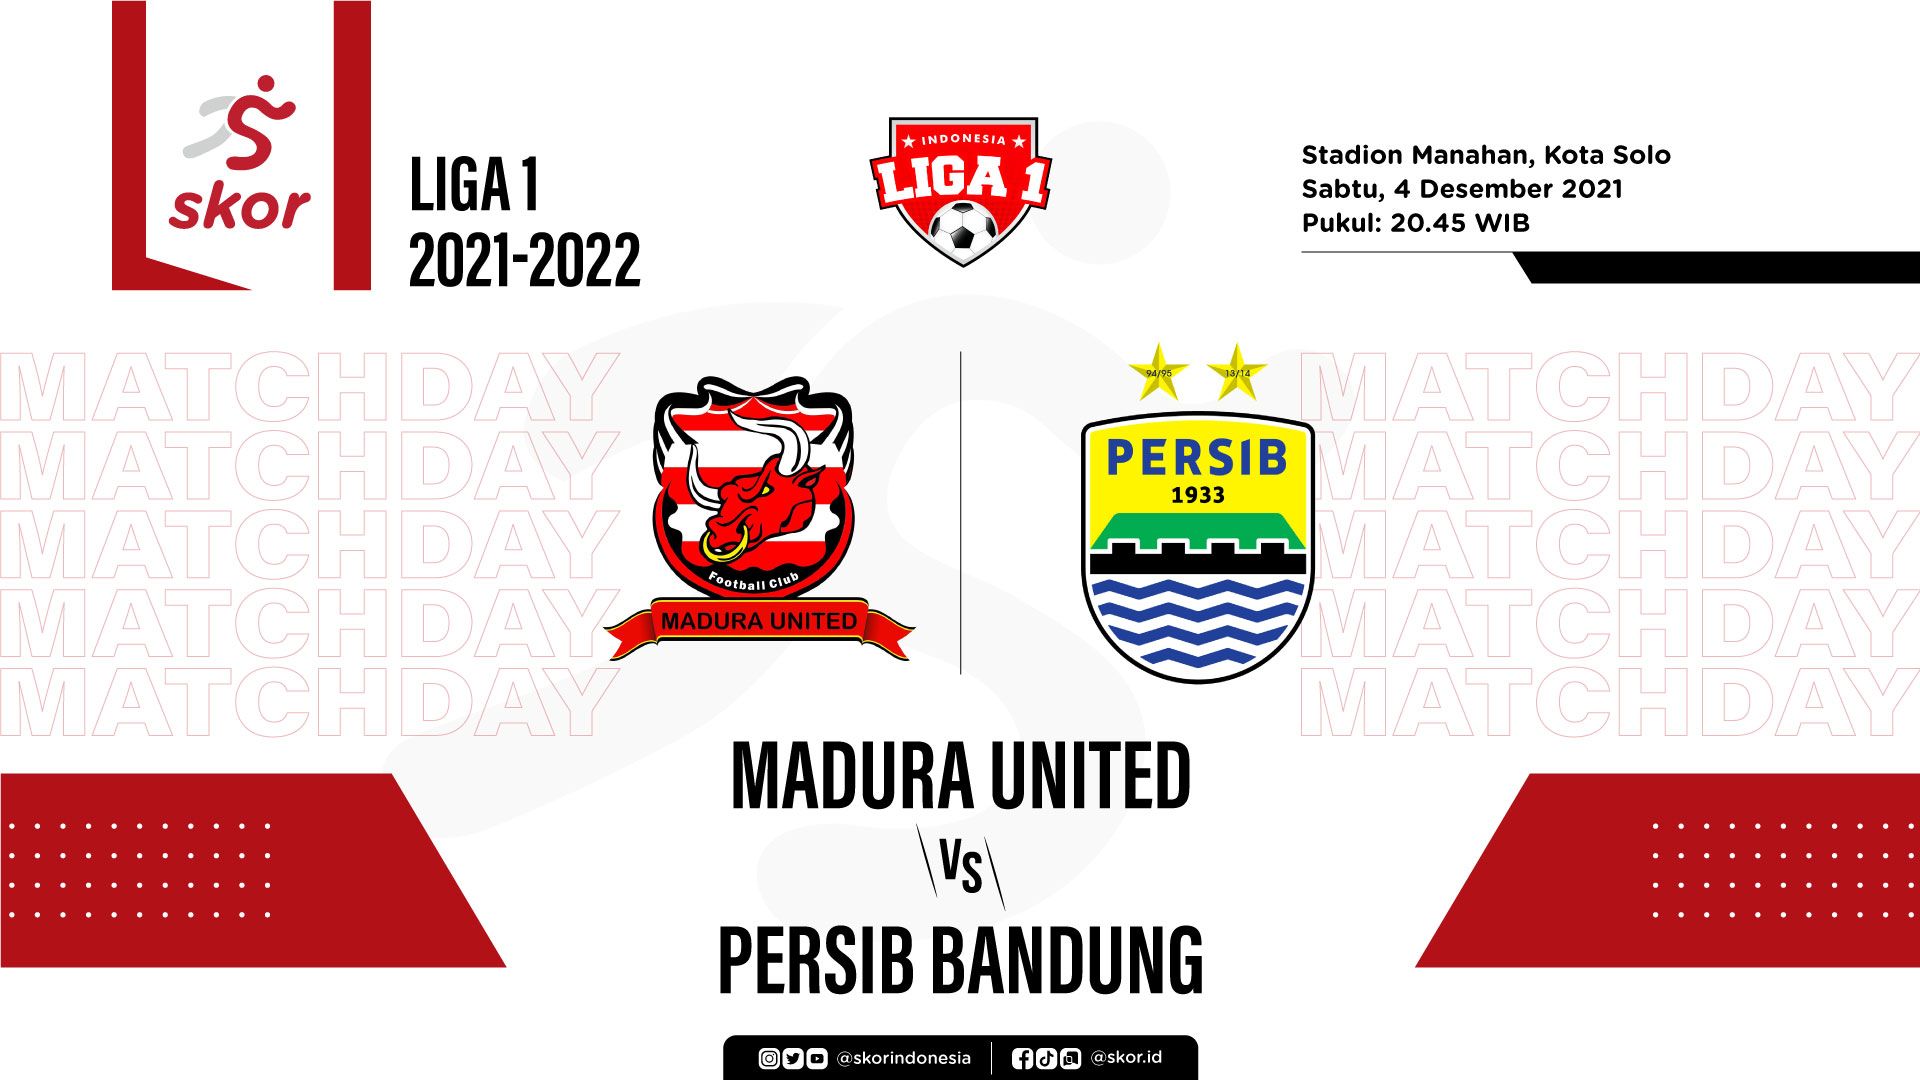 Bandung madura persib united vs Link Live